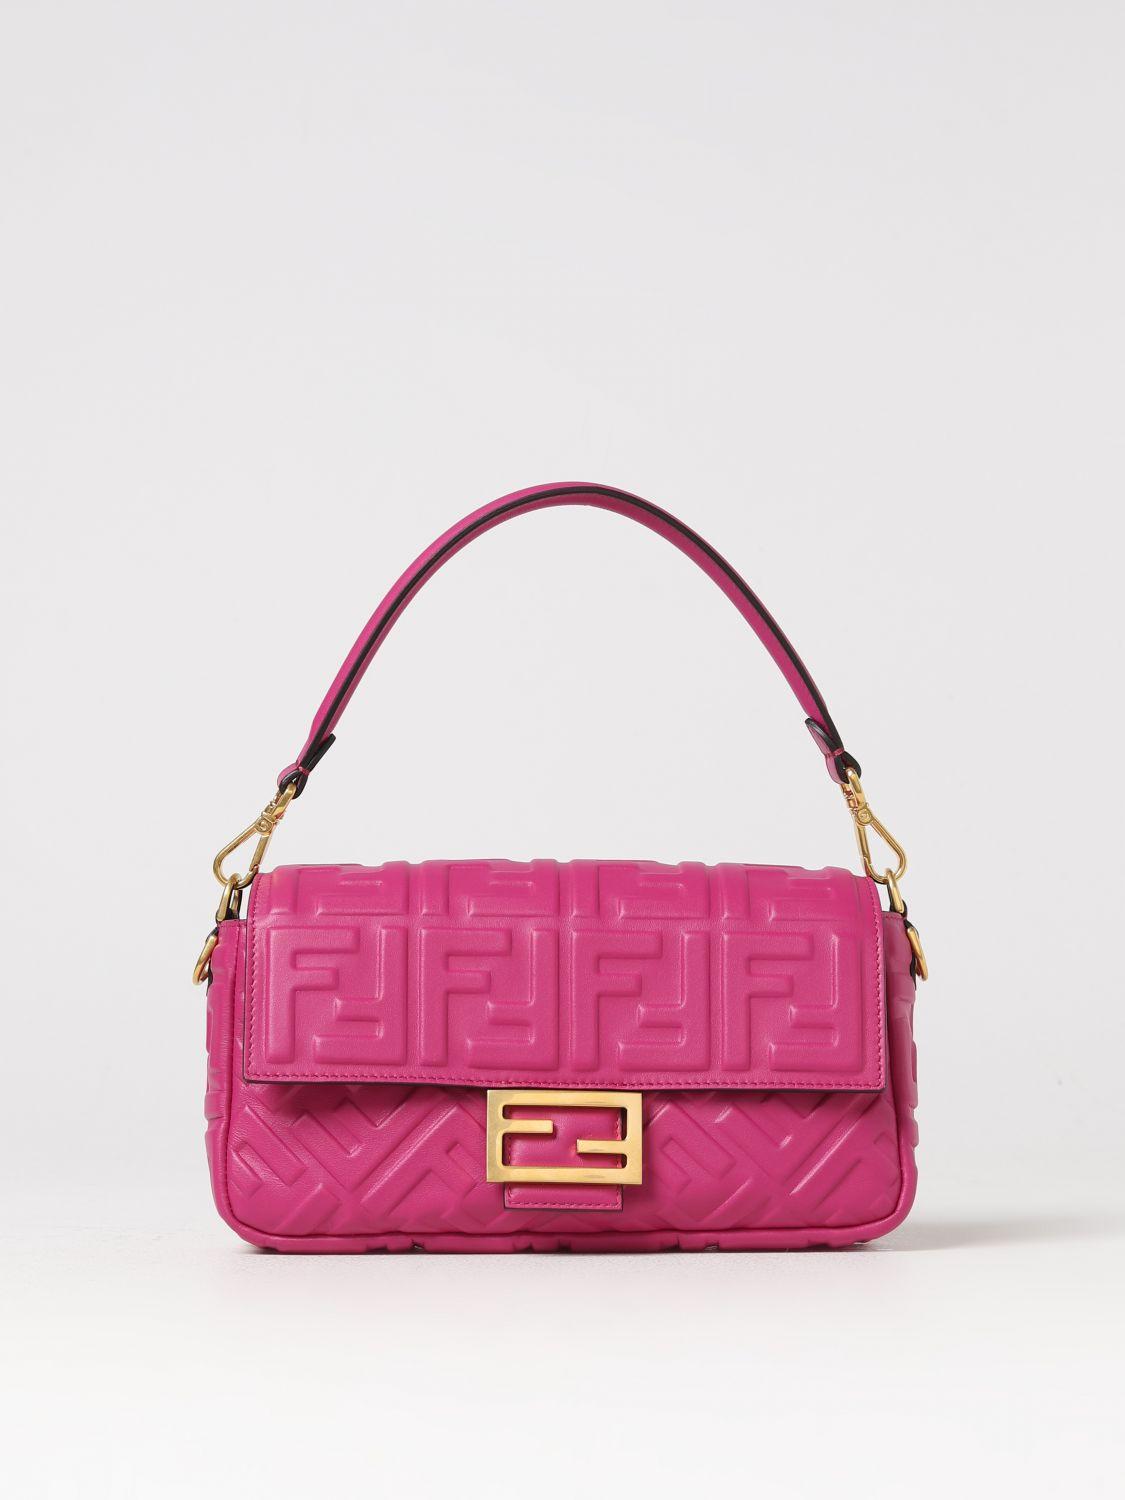 Fendi Baguette Bag In FF Motif Canvas Pink/Red